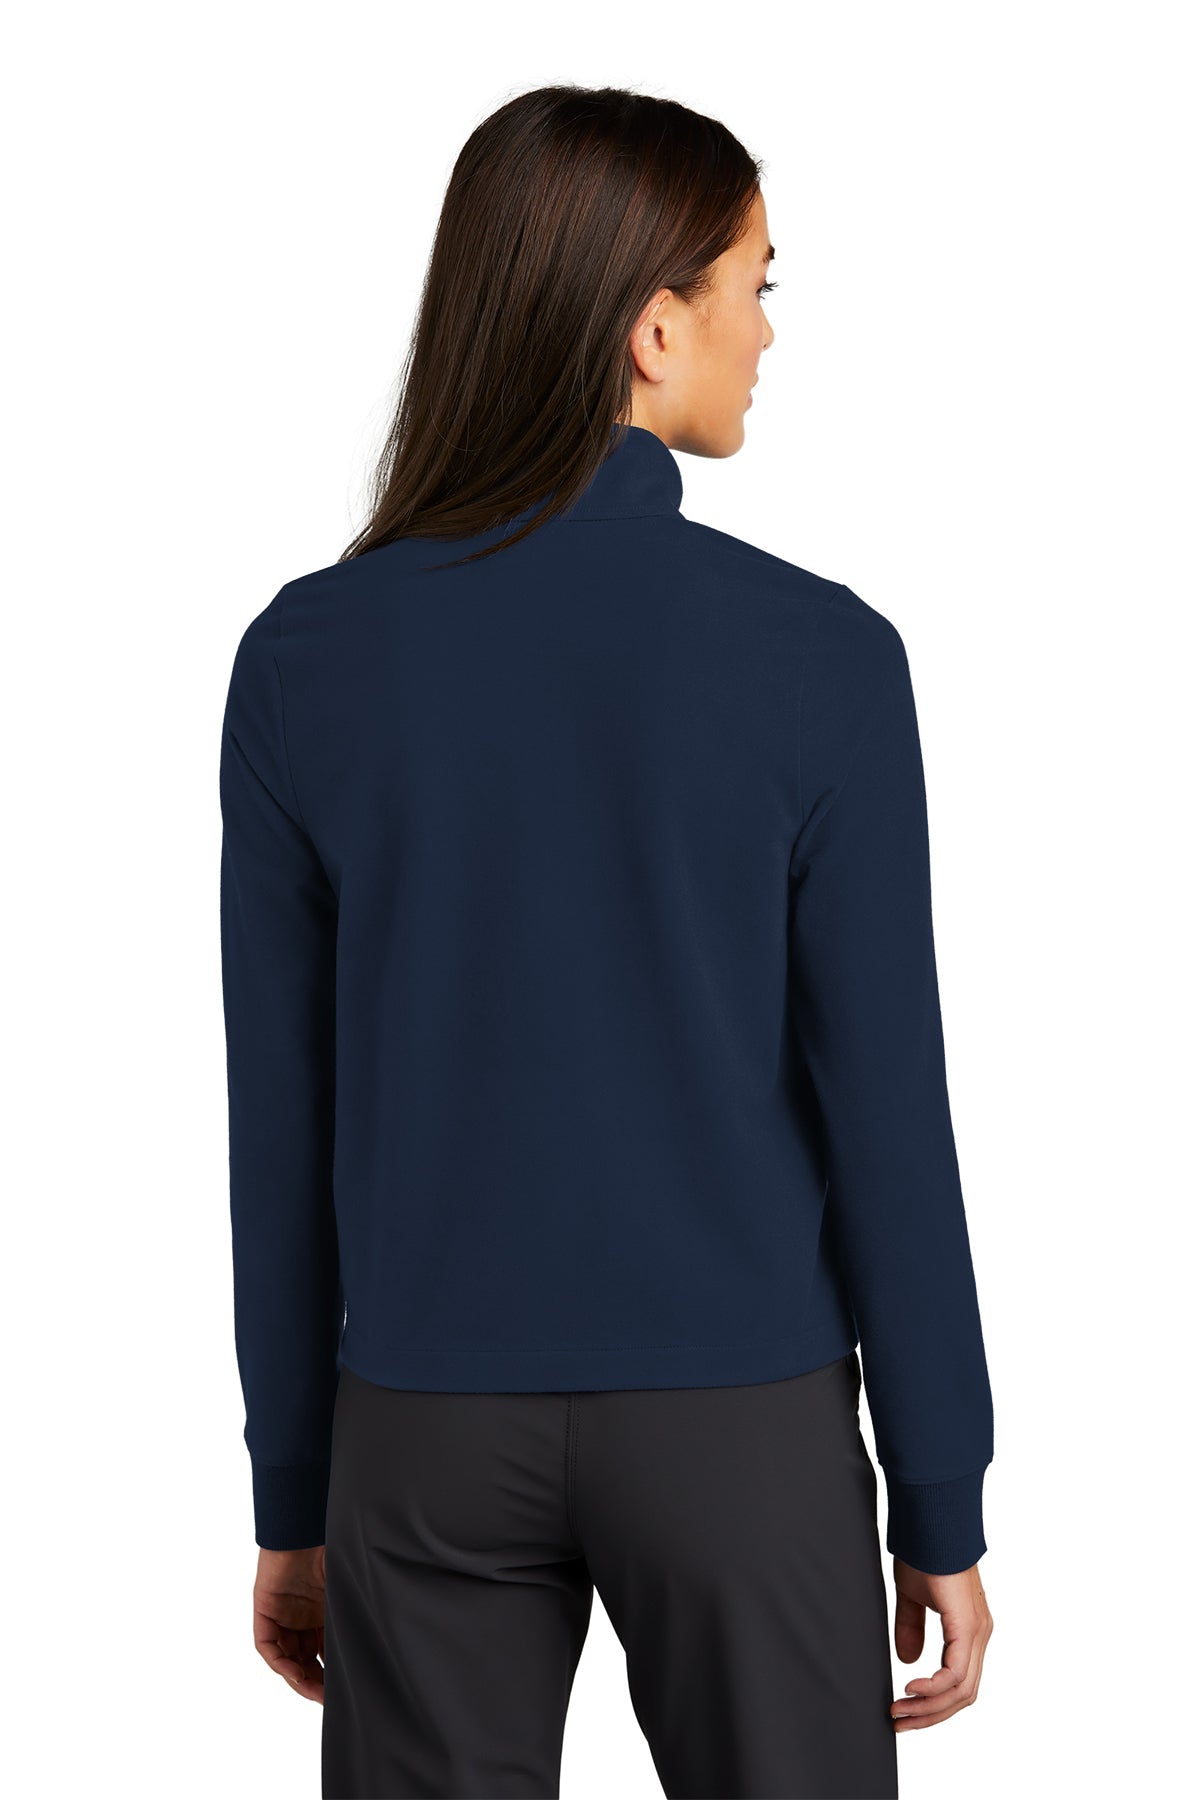 OGIO Ladies Outstretch Full-Zip Sweatshirts, River Blue Navy